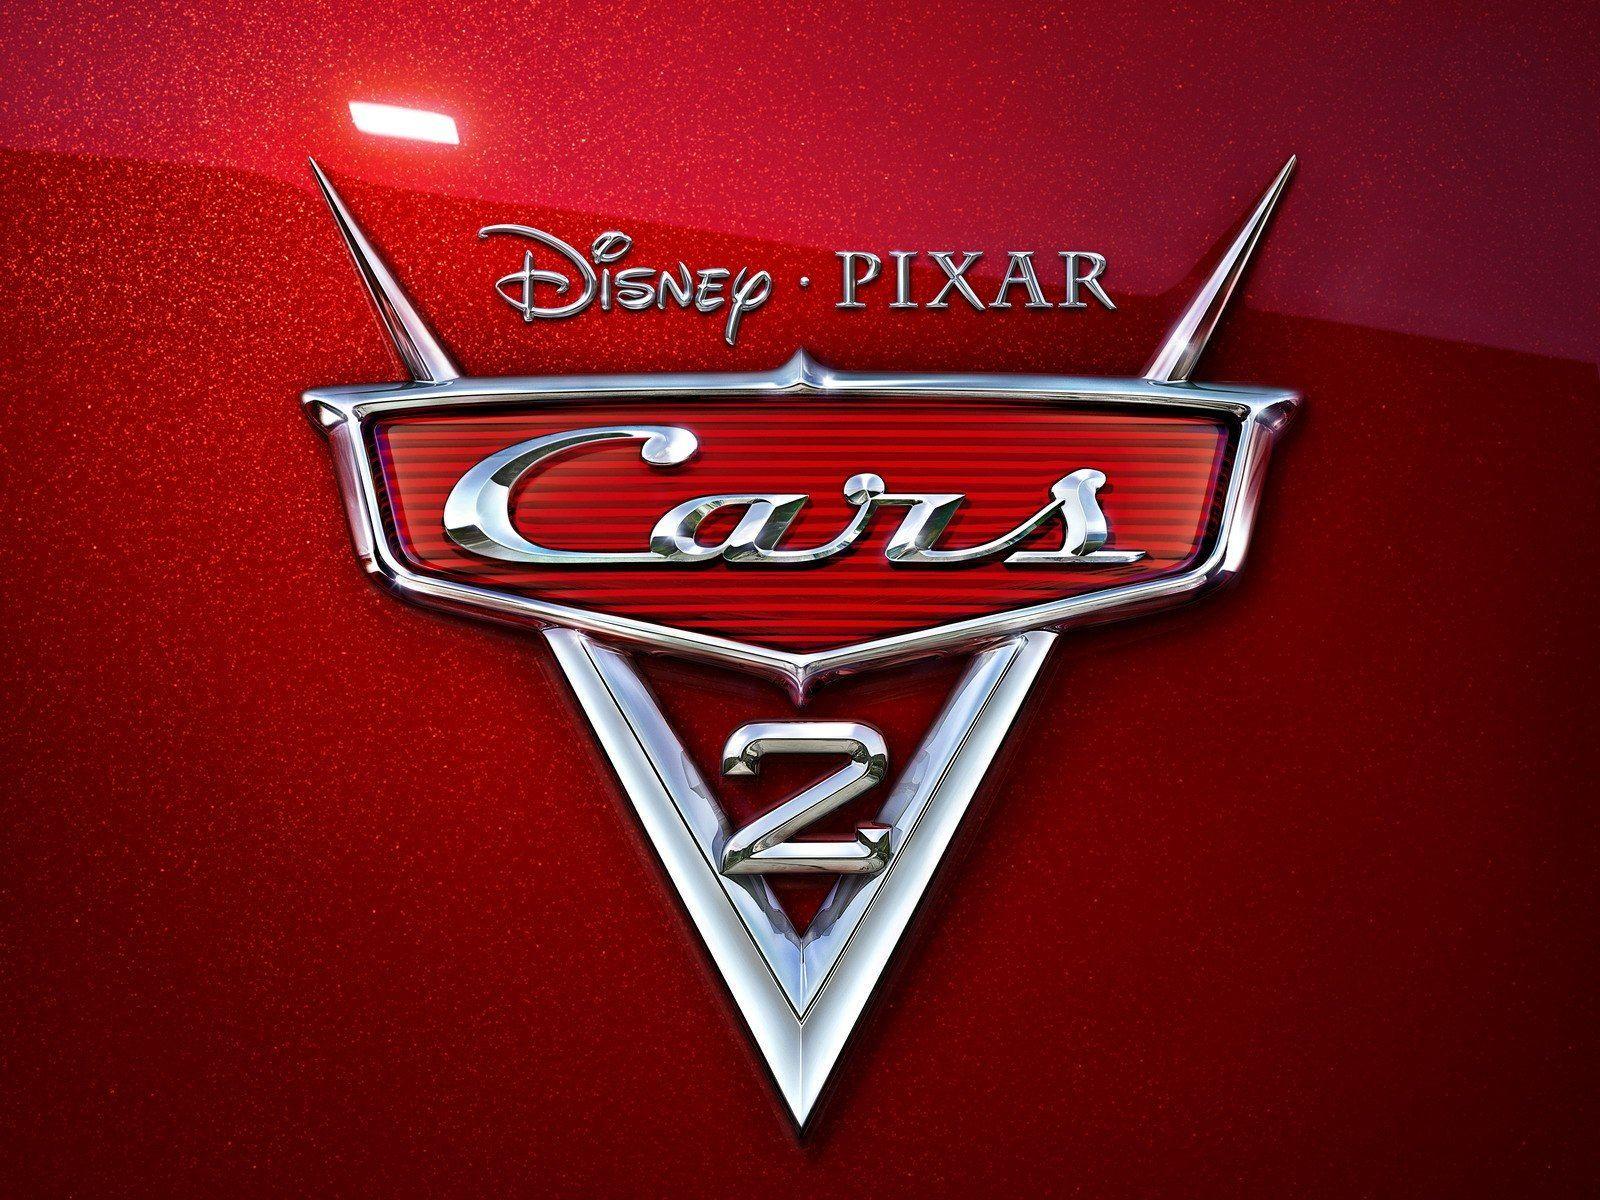 2 Disney Pixar Logo - Cars 2 Movie Disney Pixar Logos Wallpaper For Iphone | Cosas para ...